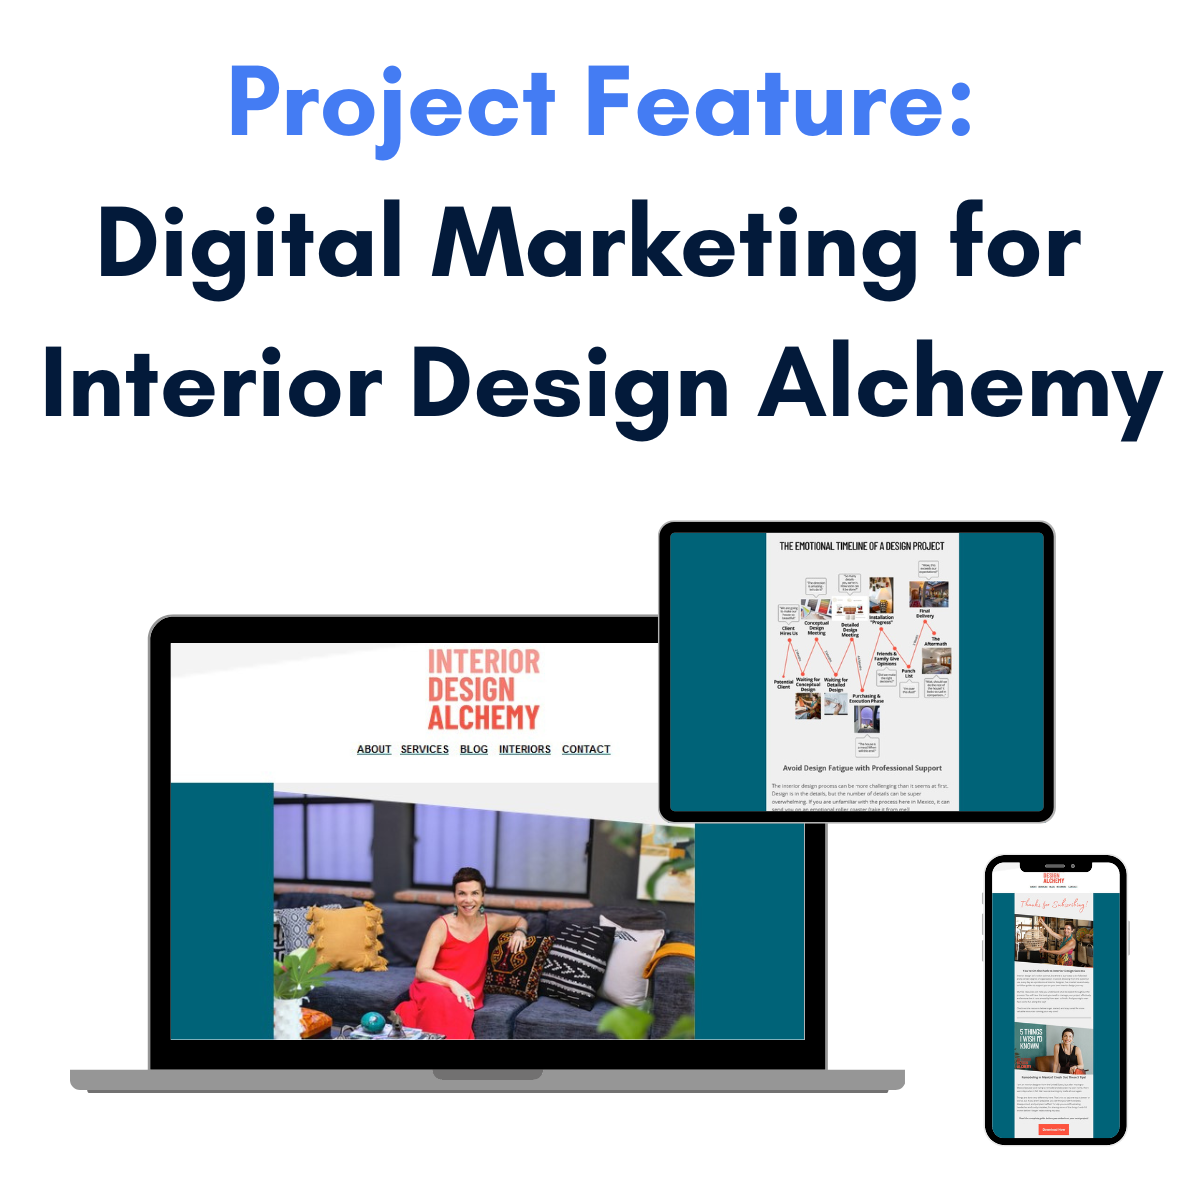 Digital Marketing for Interior Design Alchemy